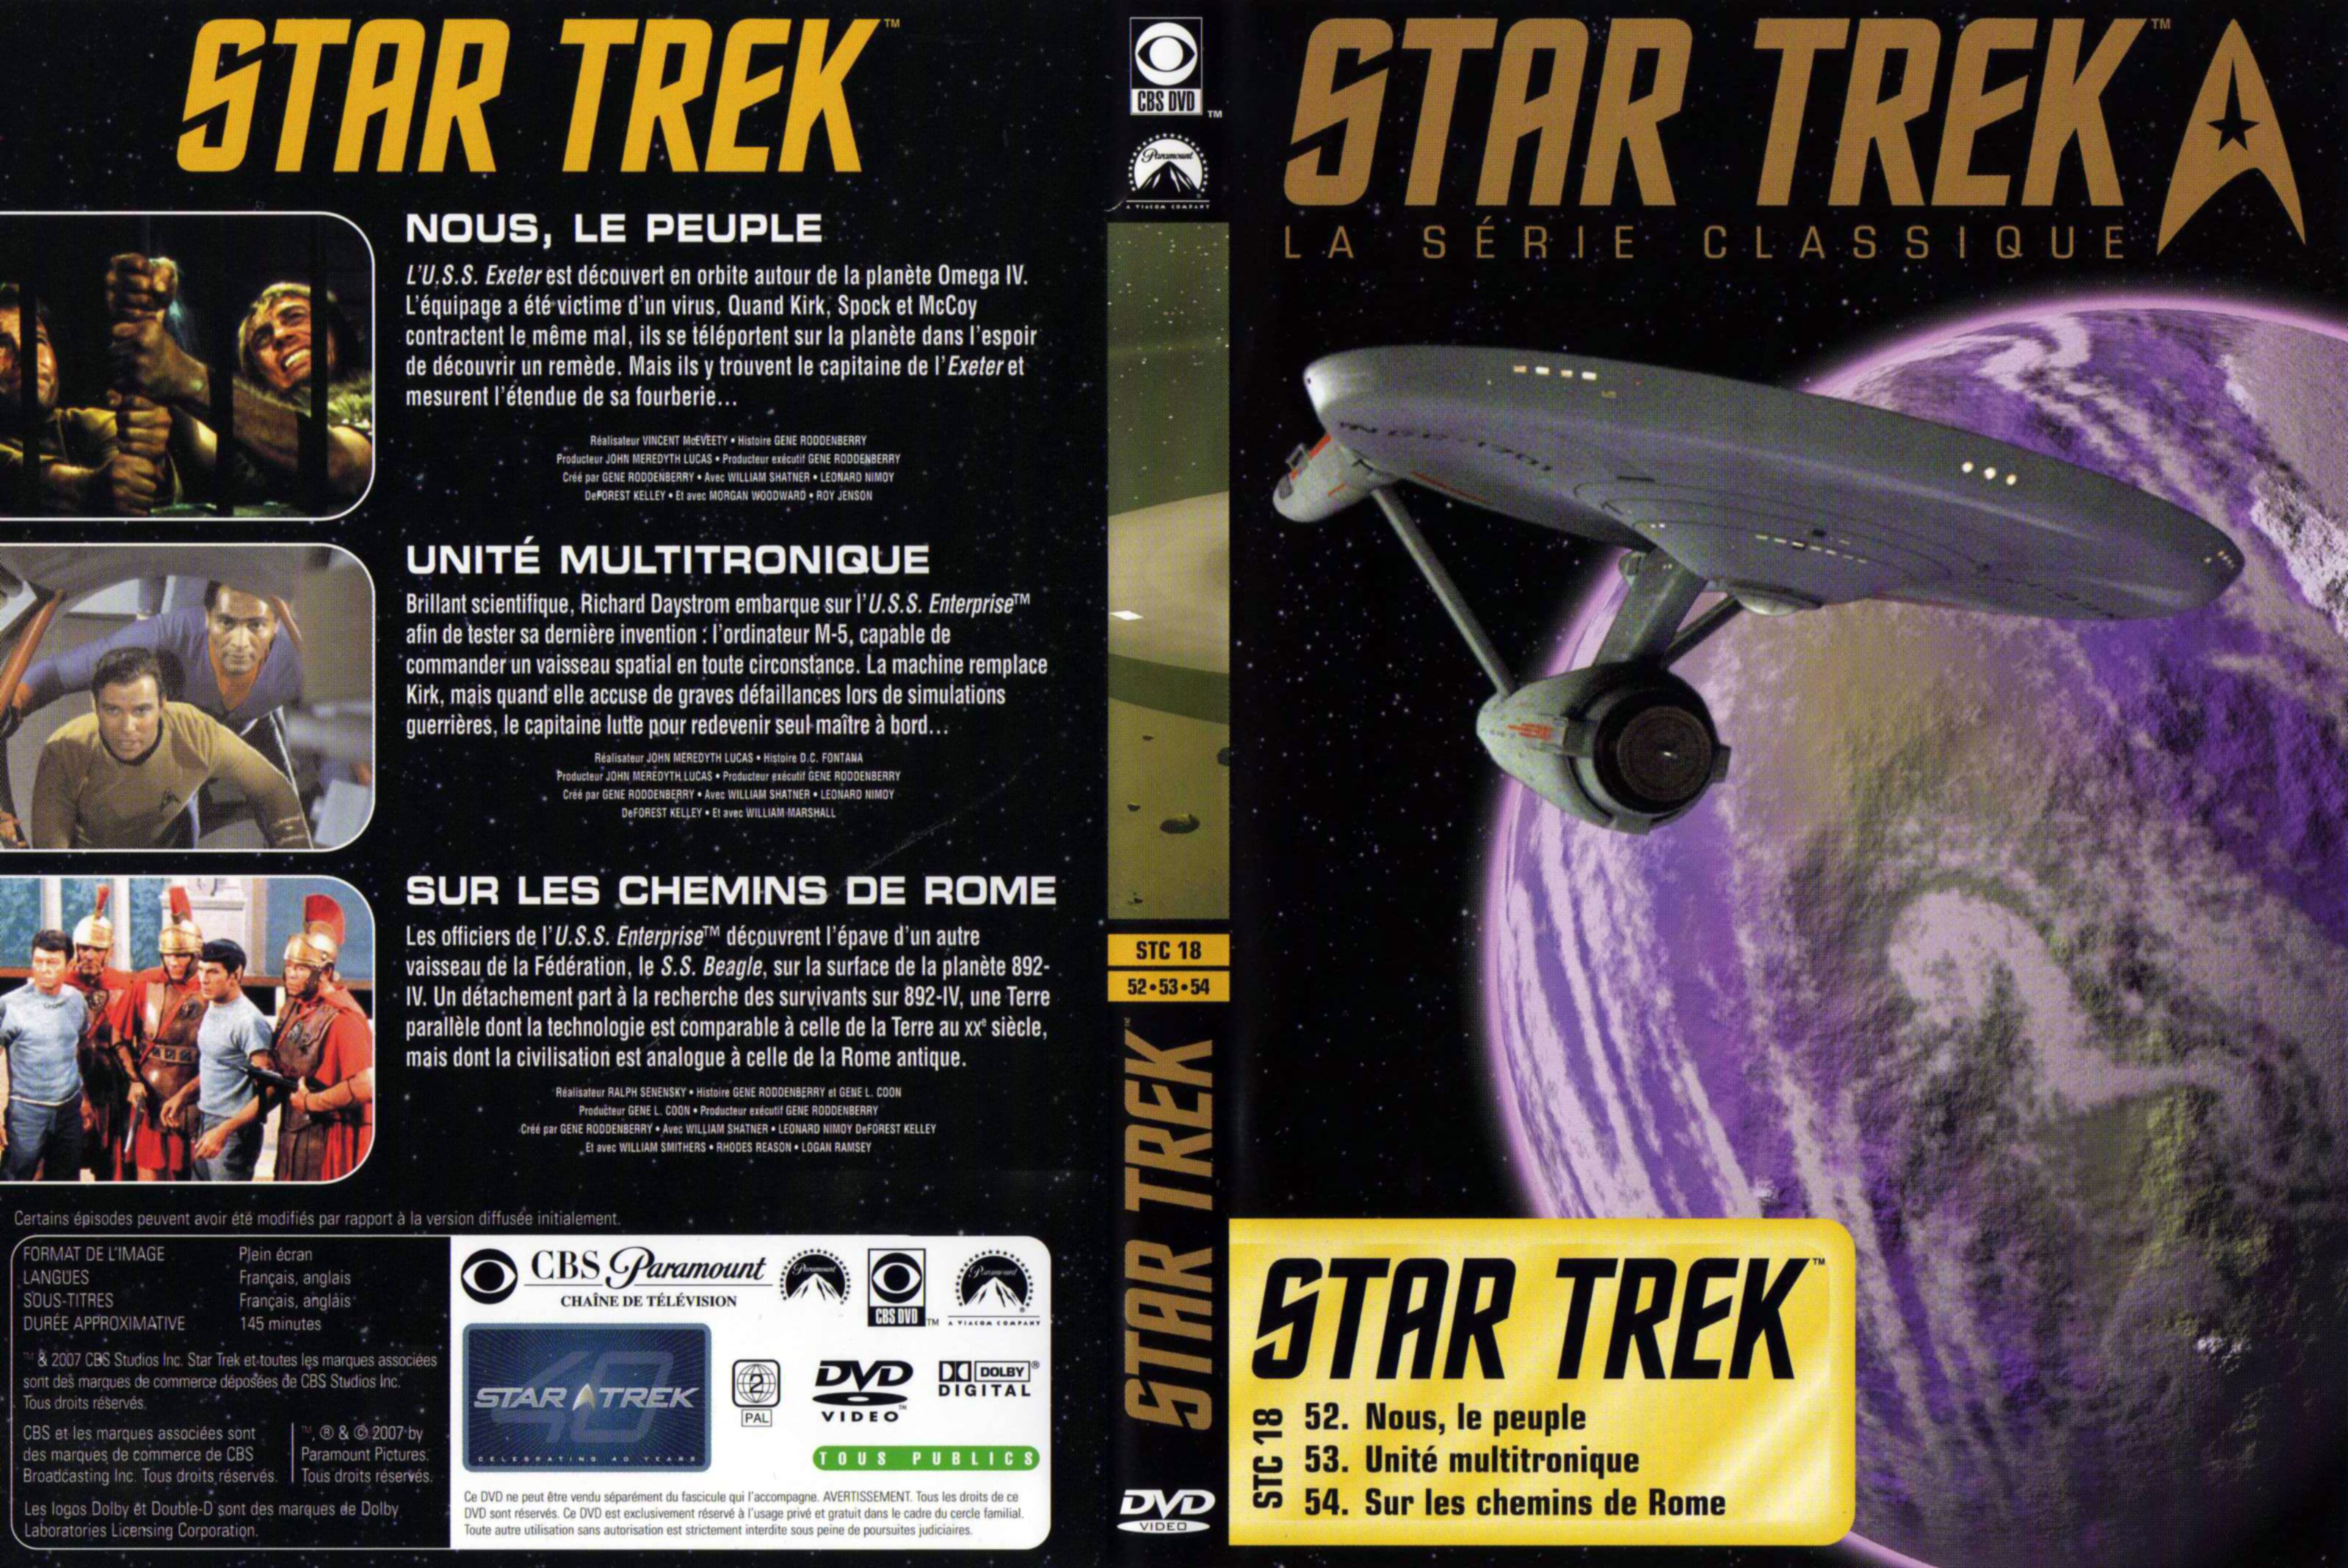 Jaquette DVD Star Trek vol 18